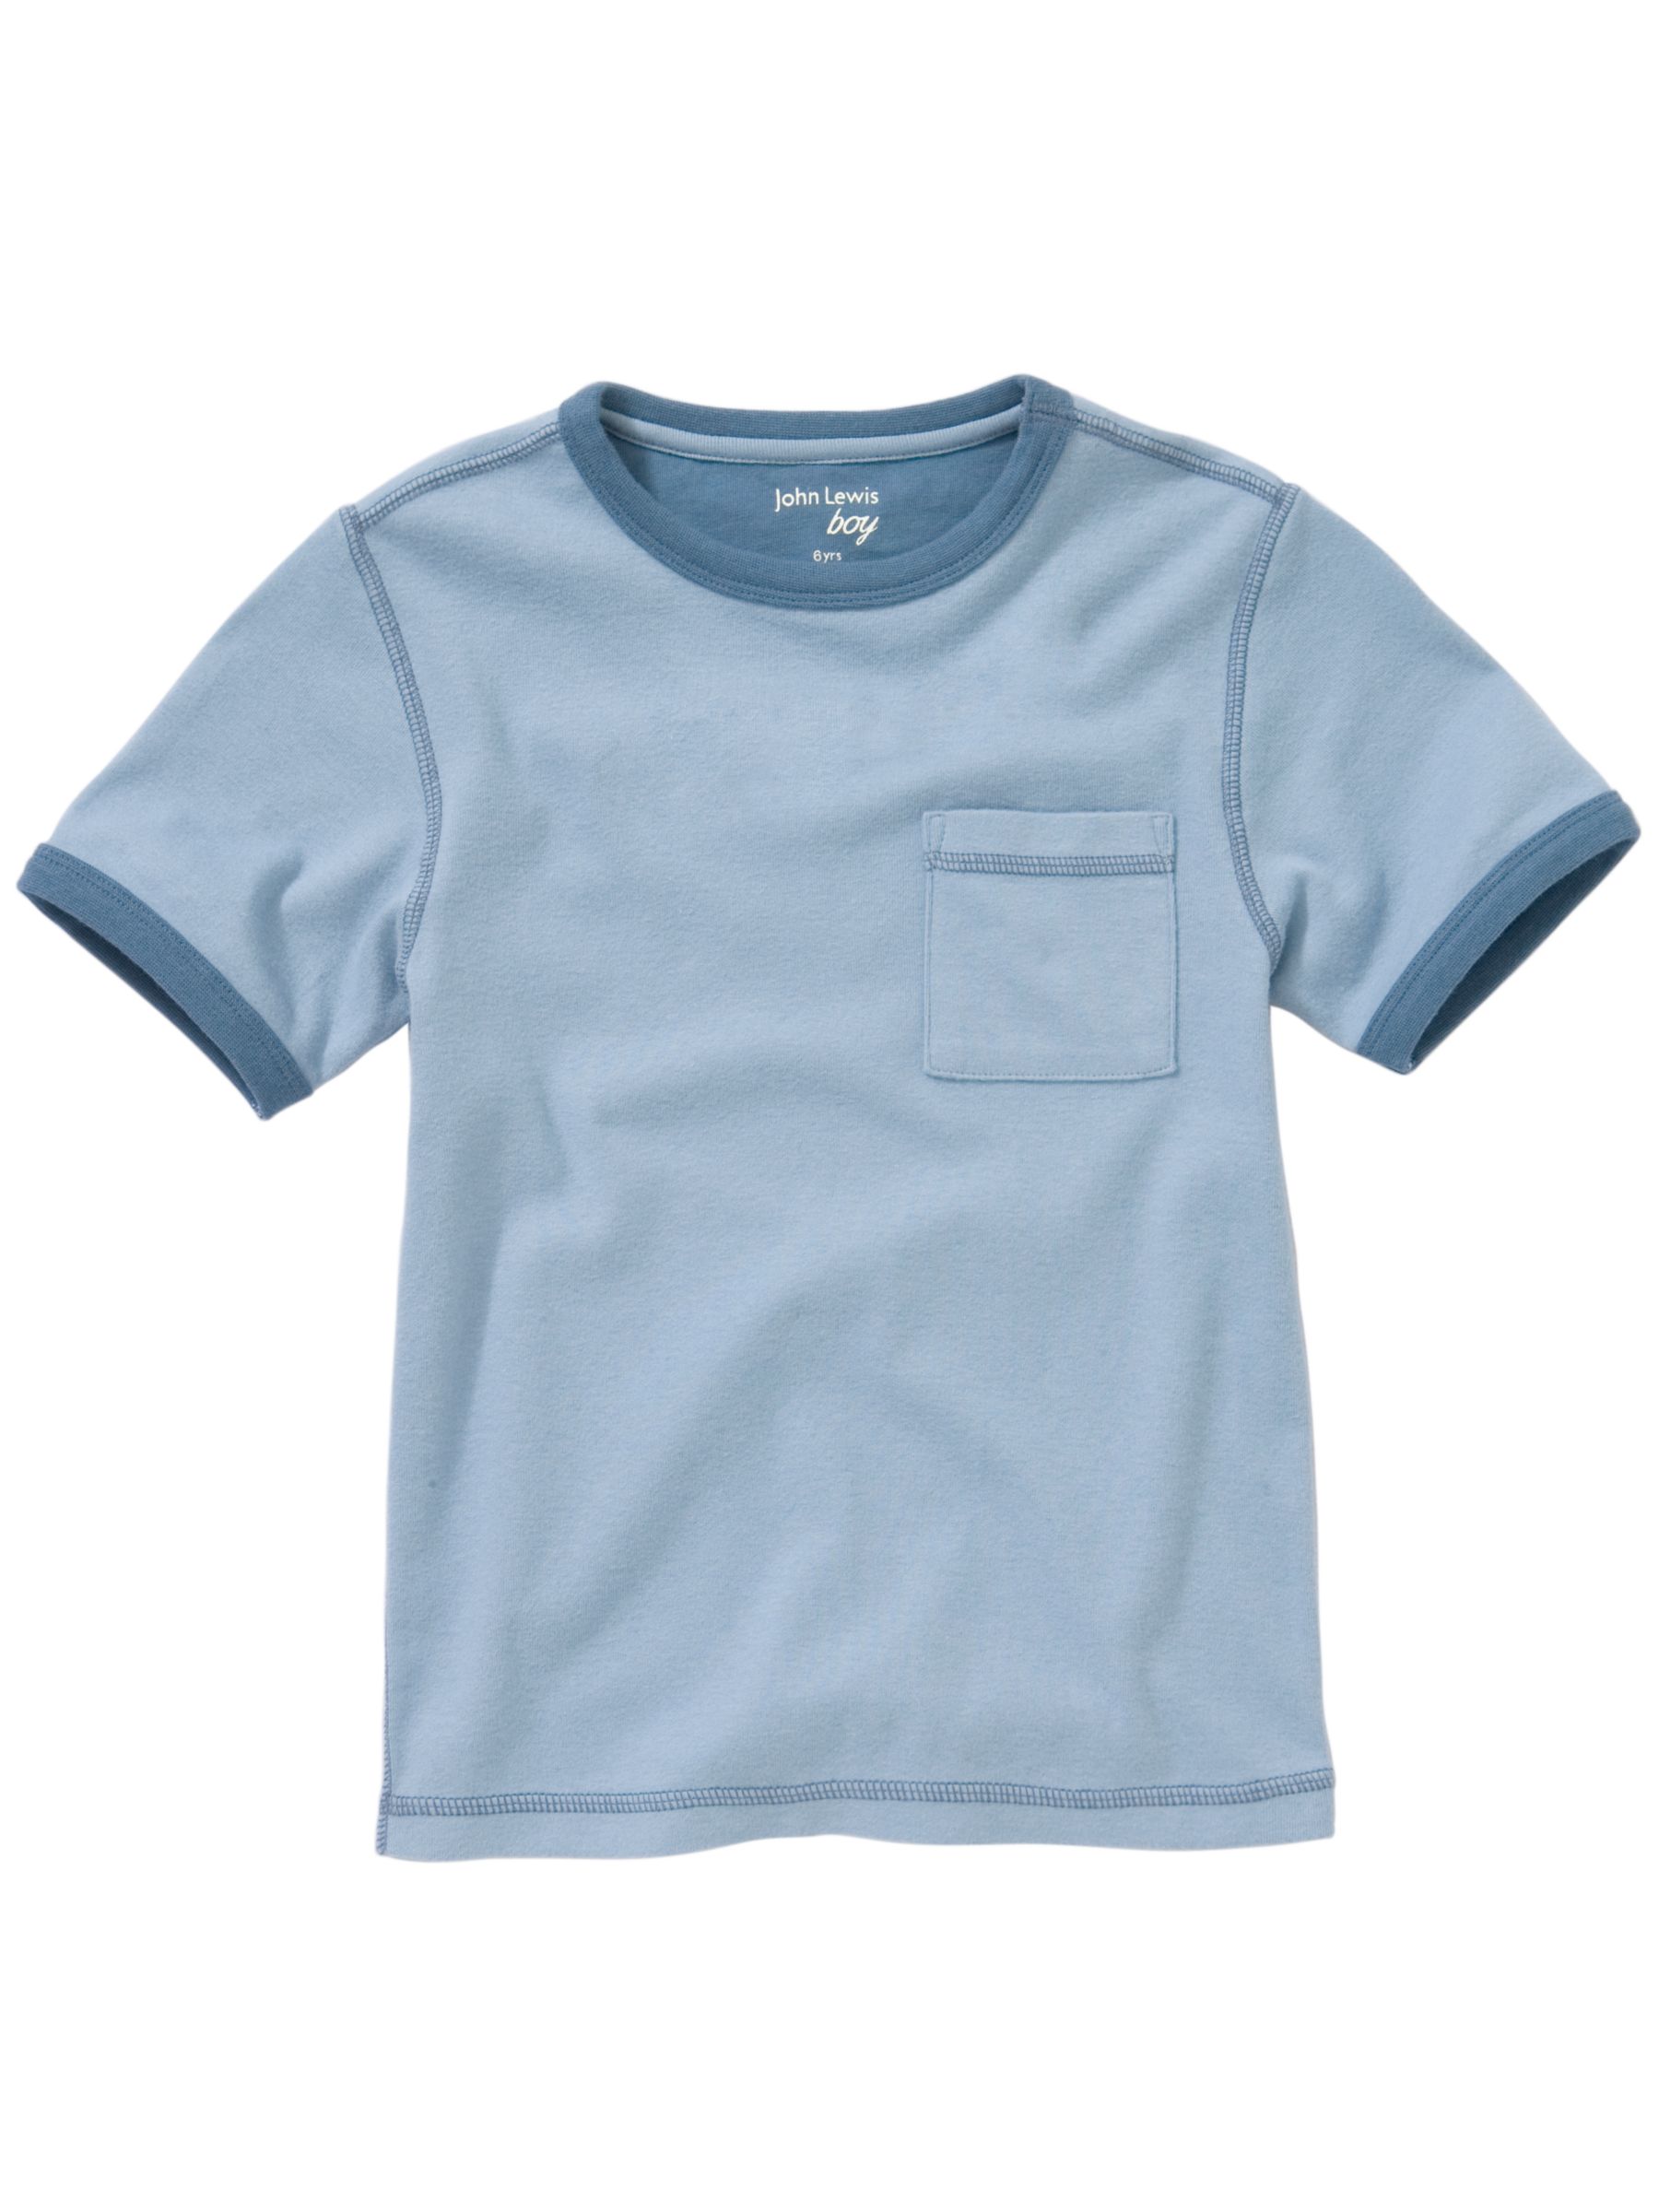 John Lewis Boy Short Sleeve T-Shirt, Blue, 5 years